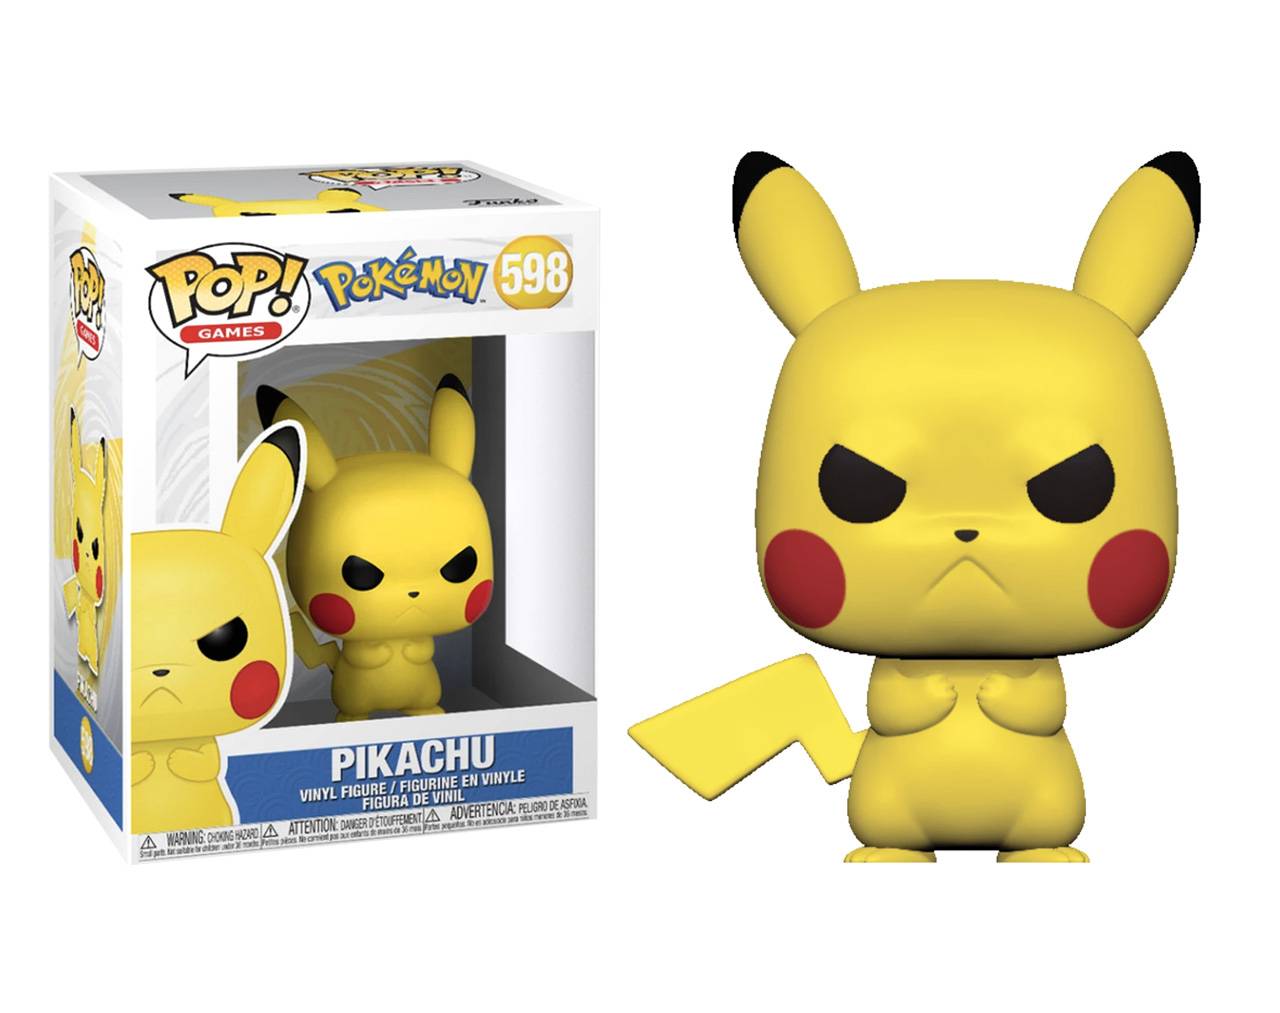 Pikachu (Angry) - Pokémon Pop! Vinyl